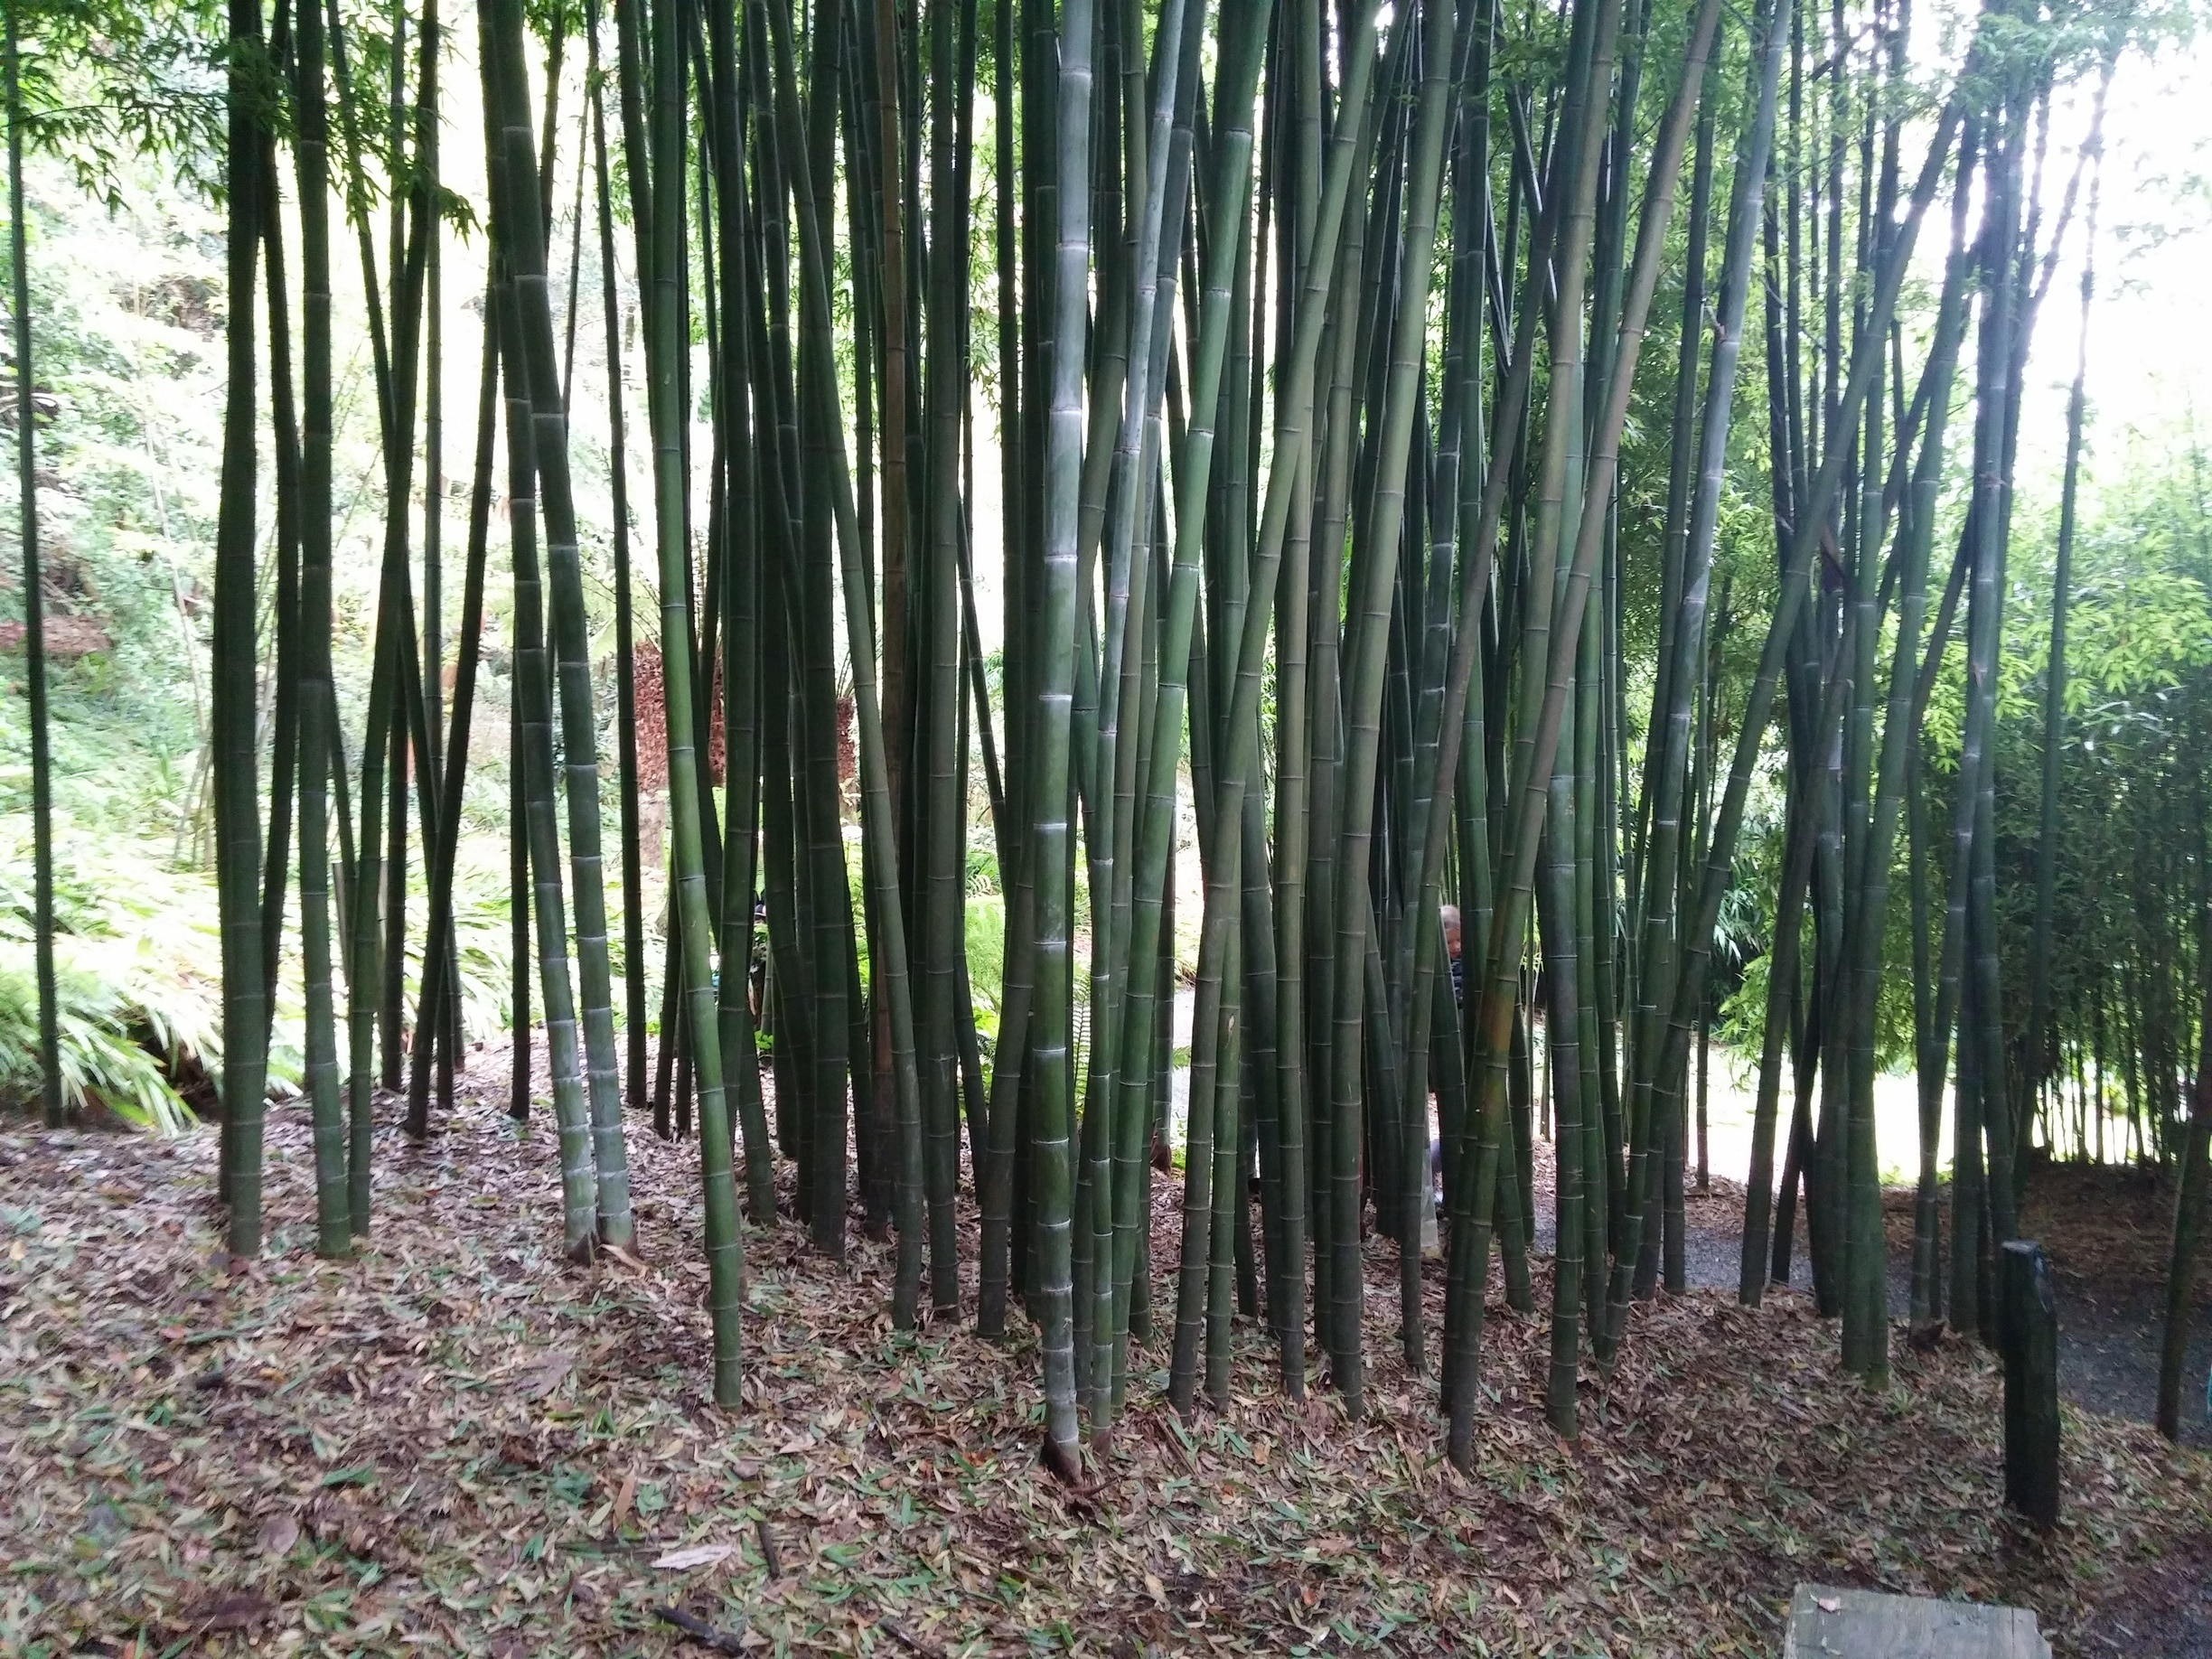 Amazing variety of bamboo at Trebah Gardens in Cornwall.